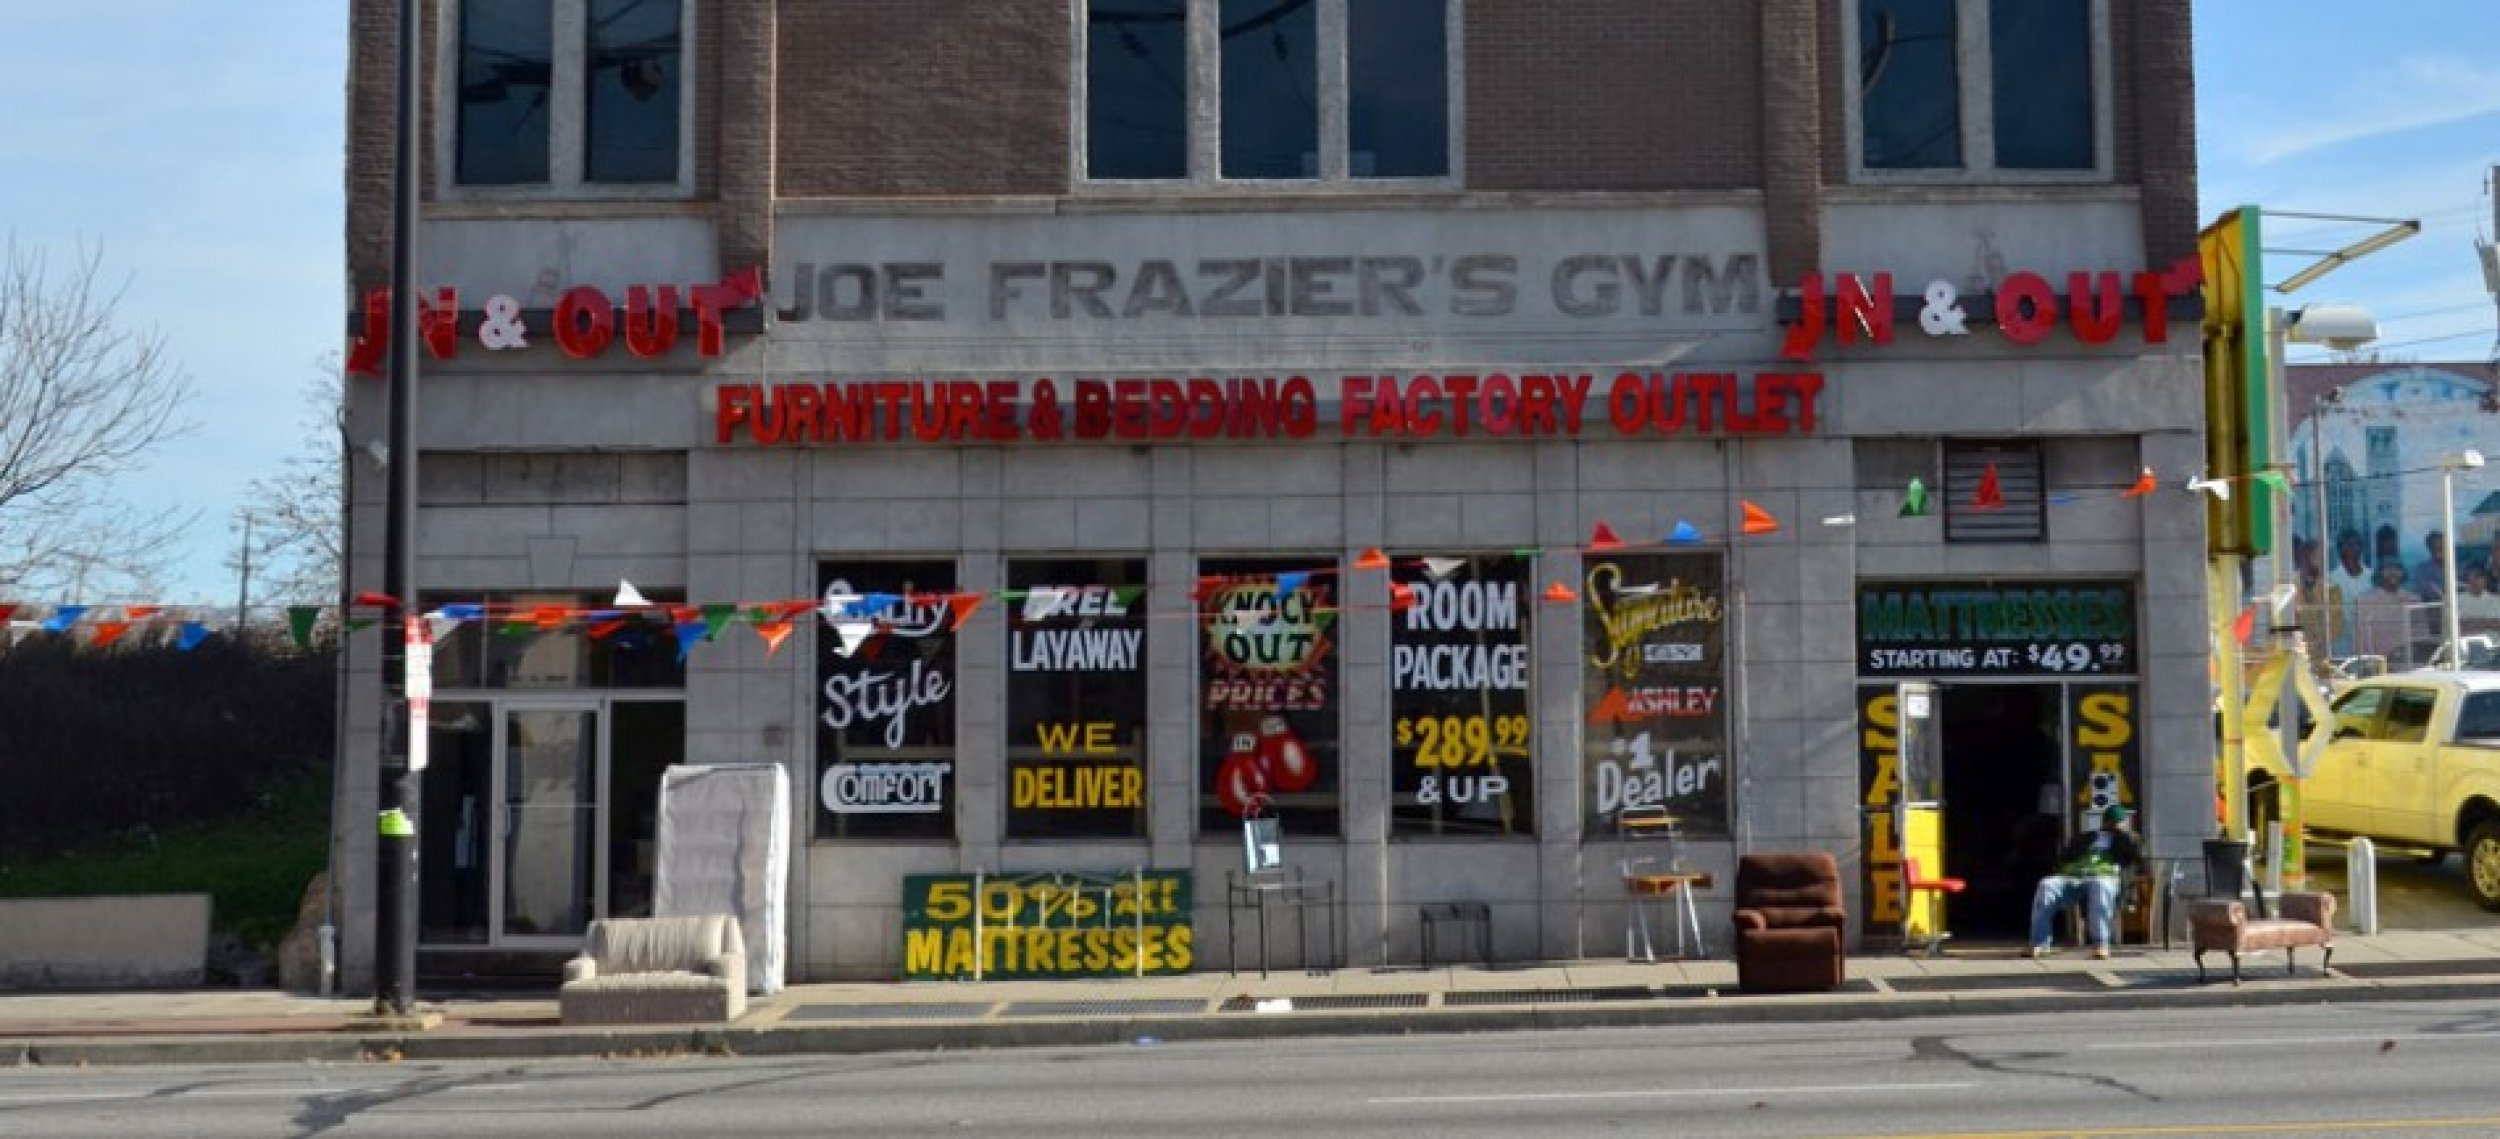 Joe Fraziers Gym - Philadelphia, PA